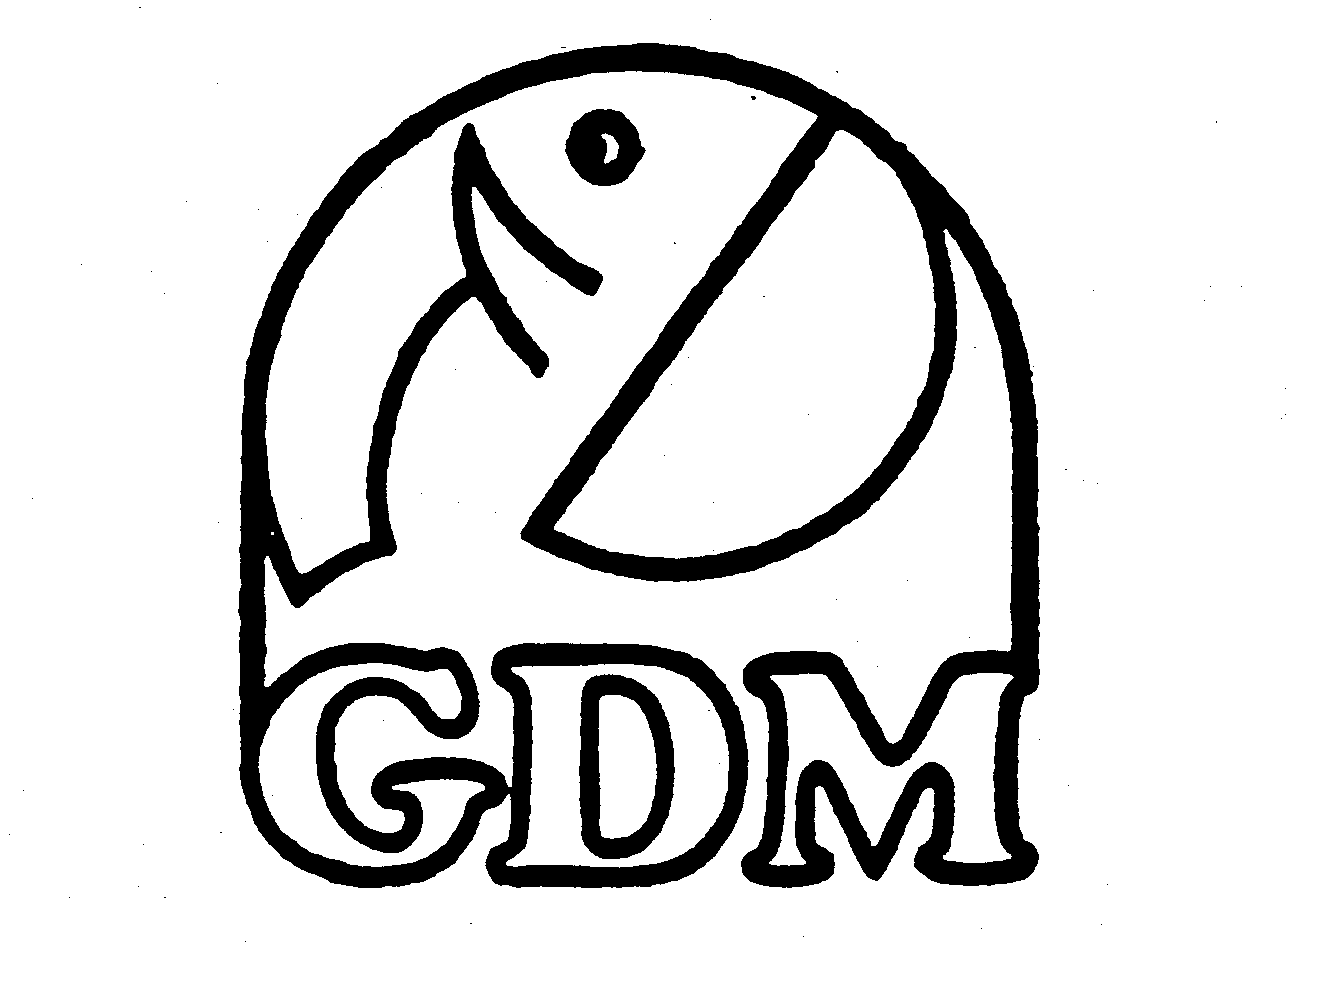 Trademark Logo GDM